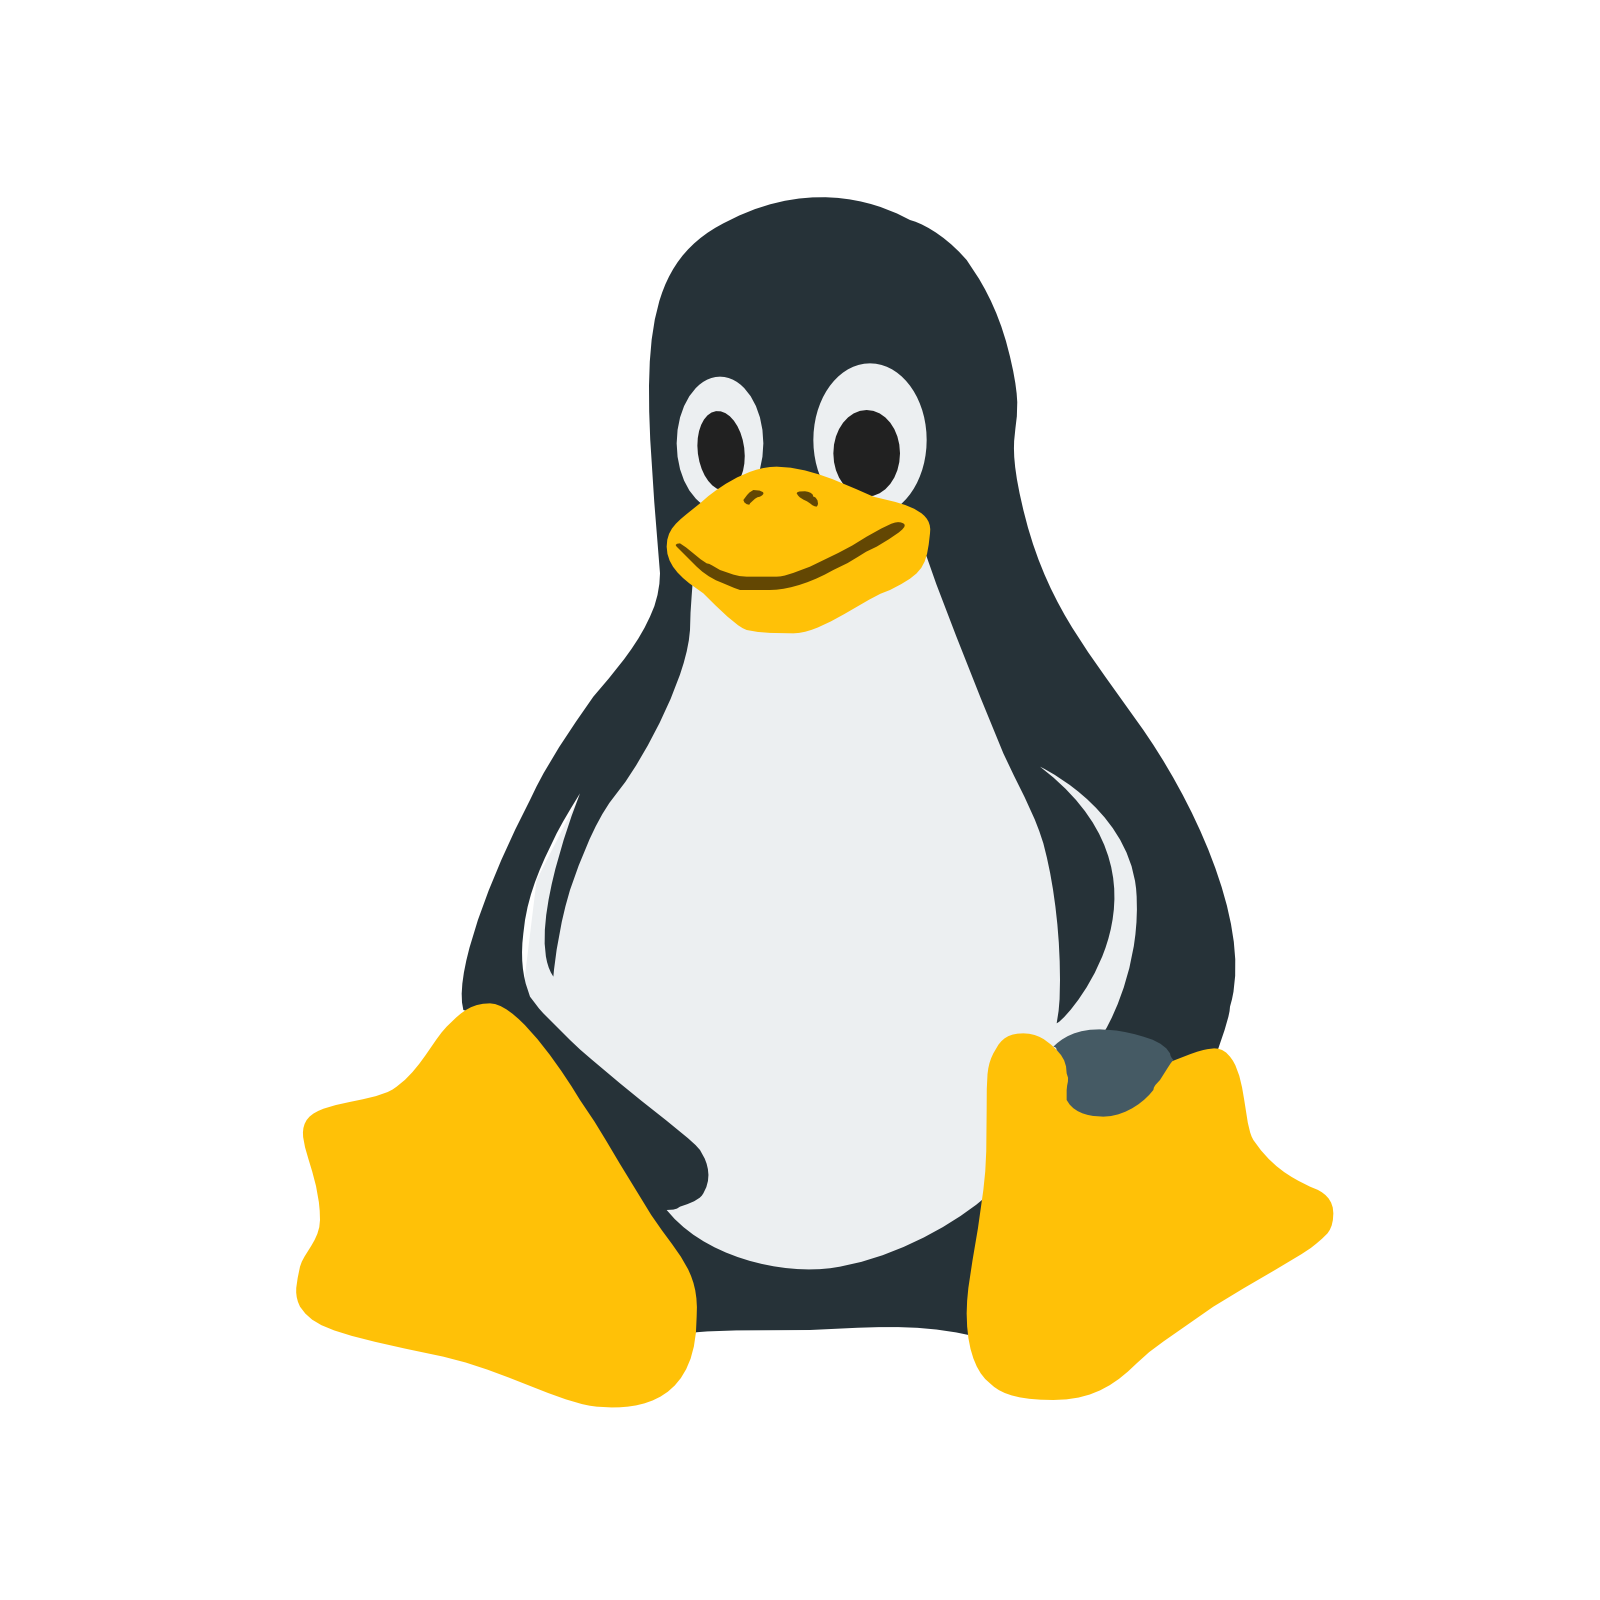 linux logo